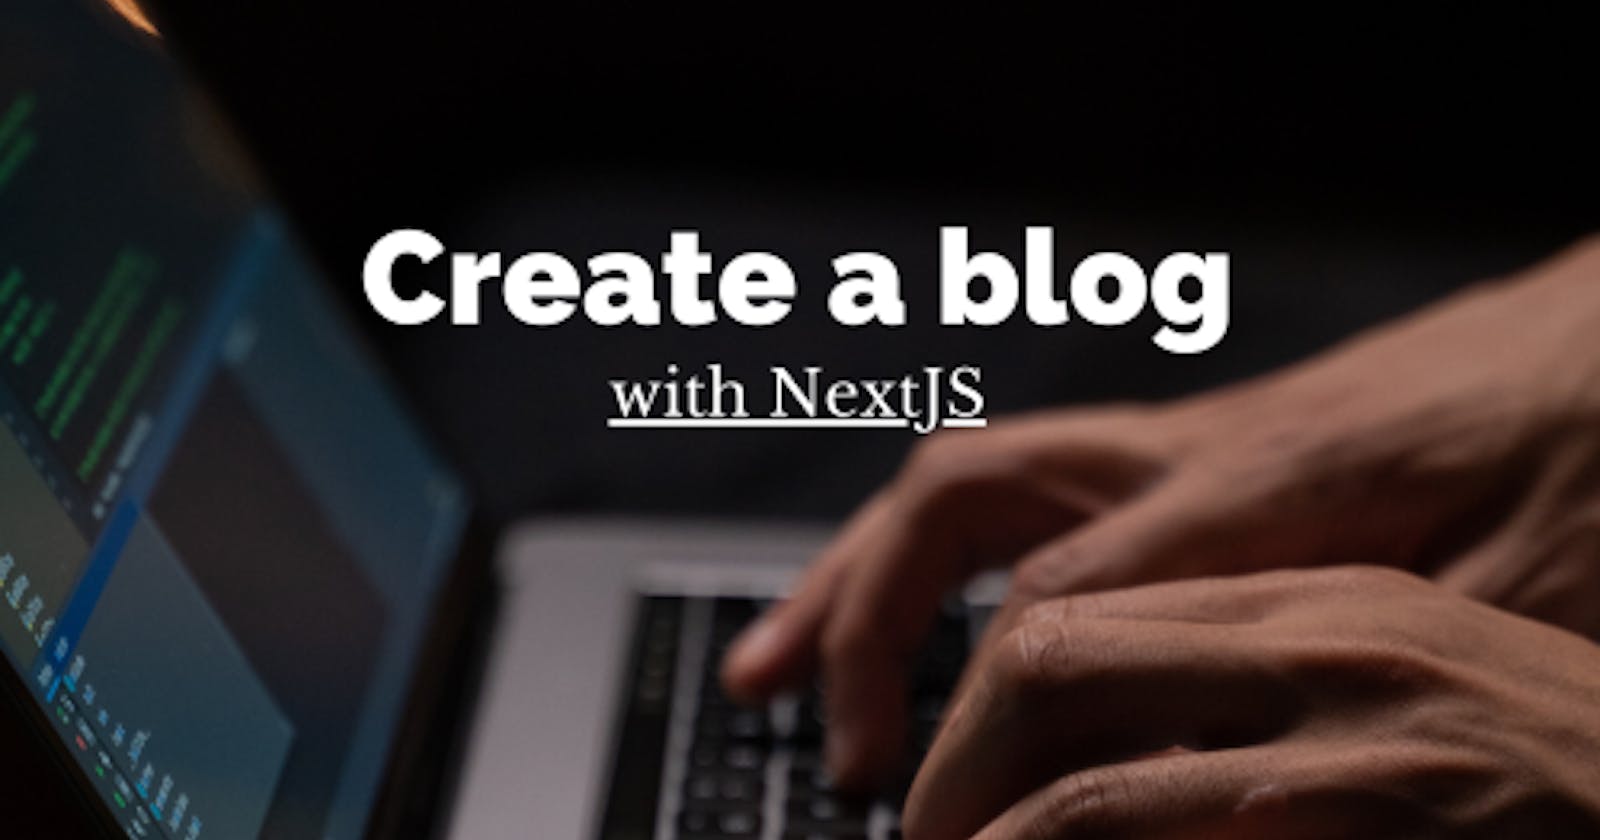 Create a blog with NextJS